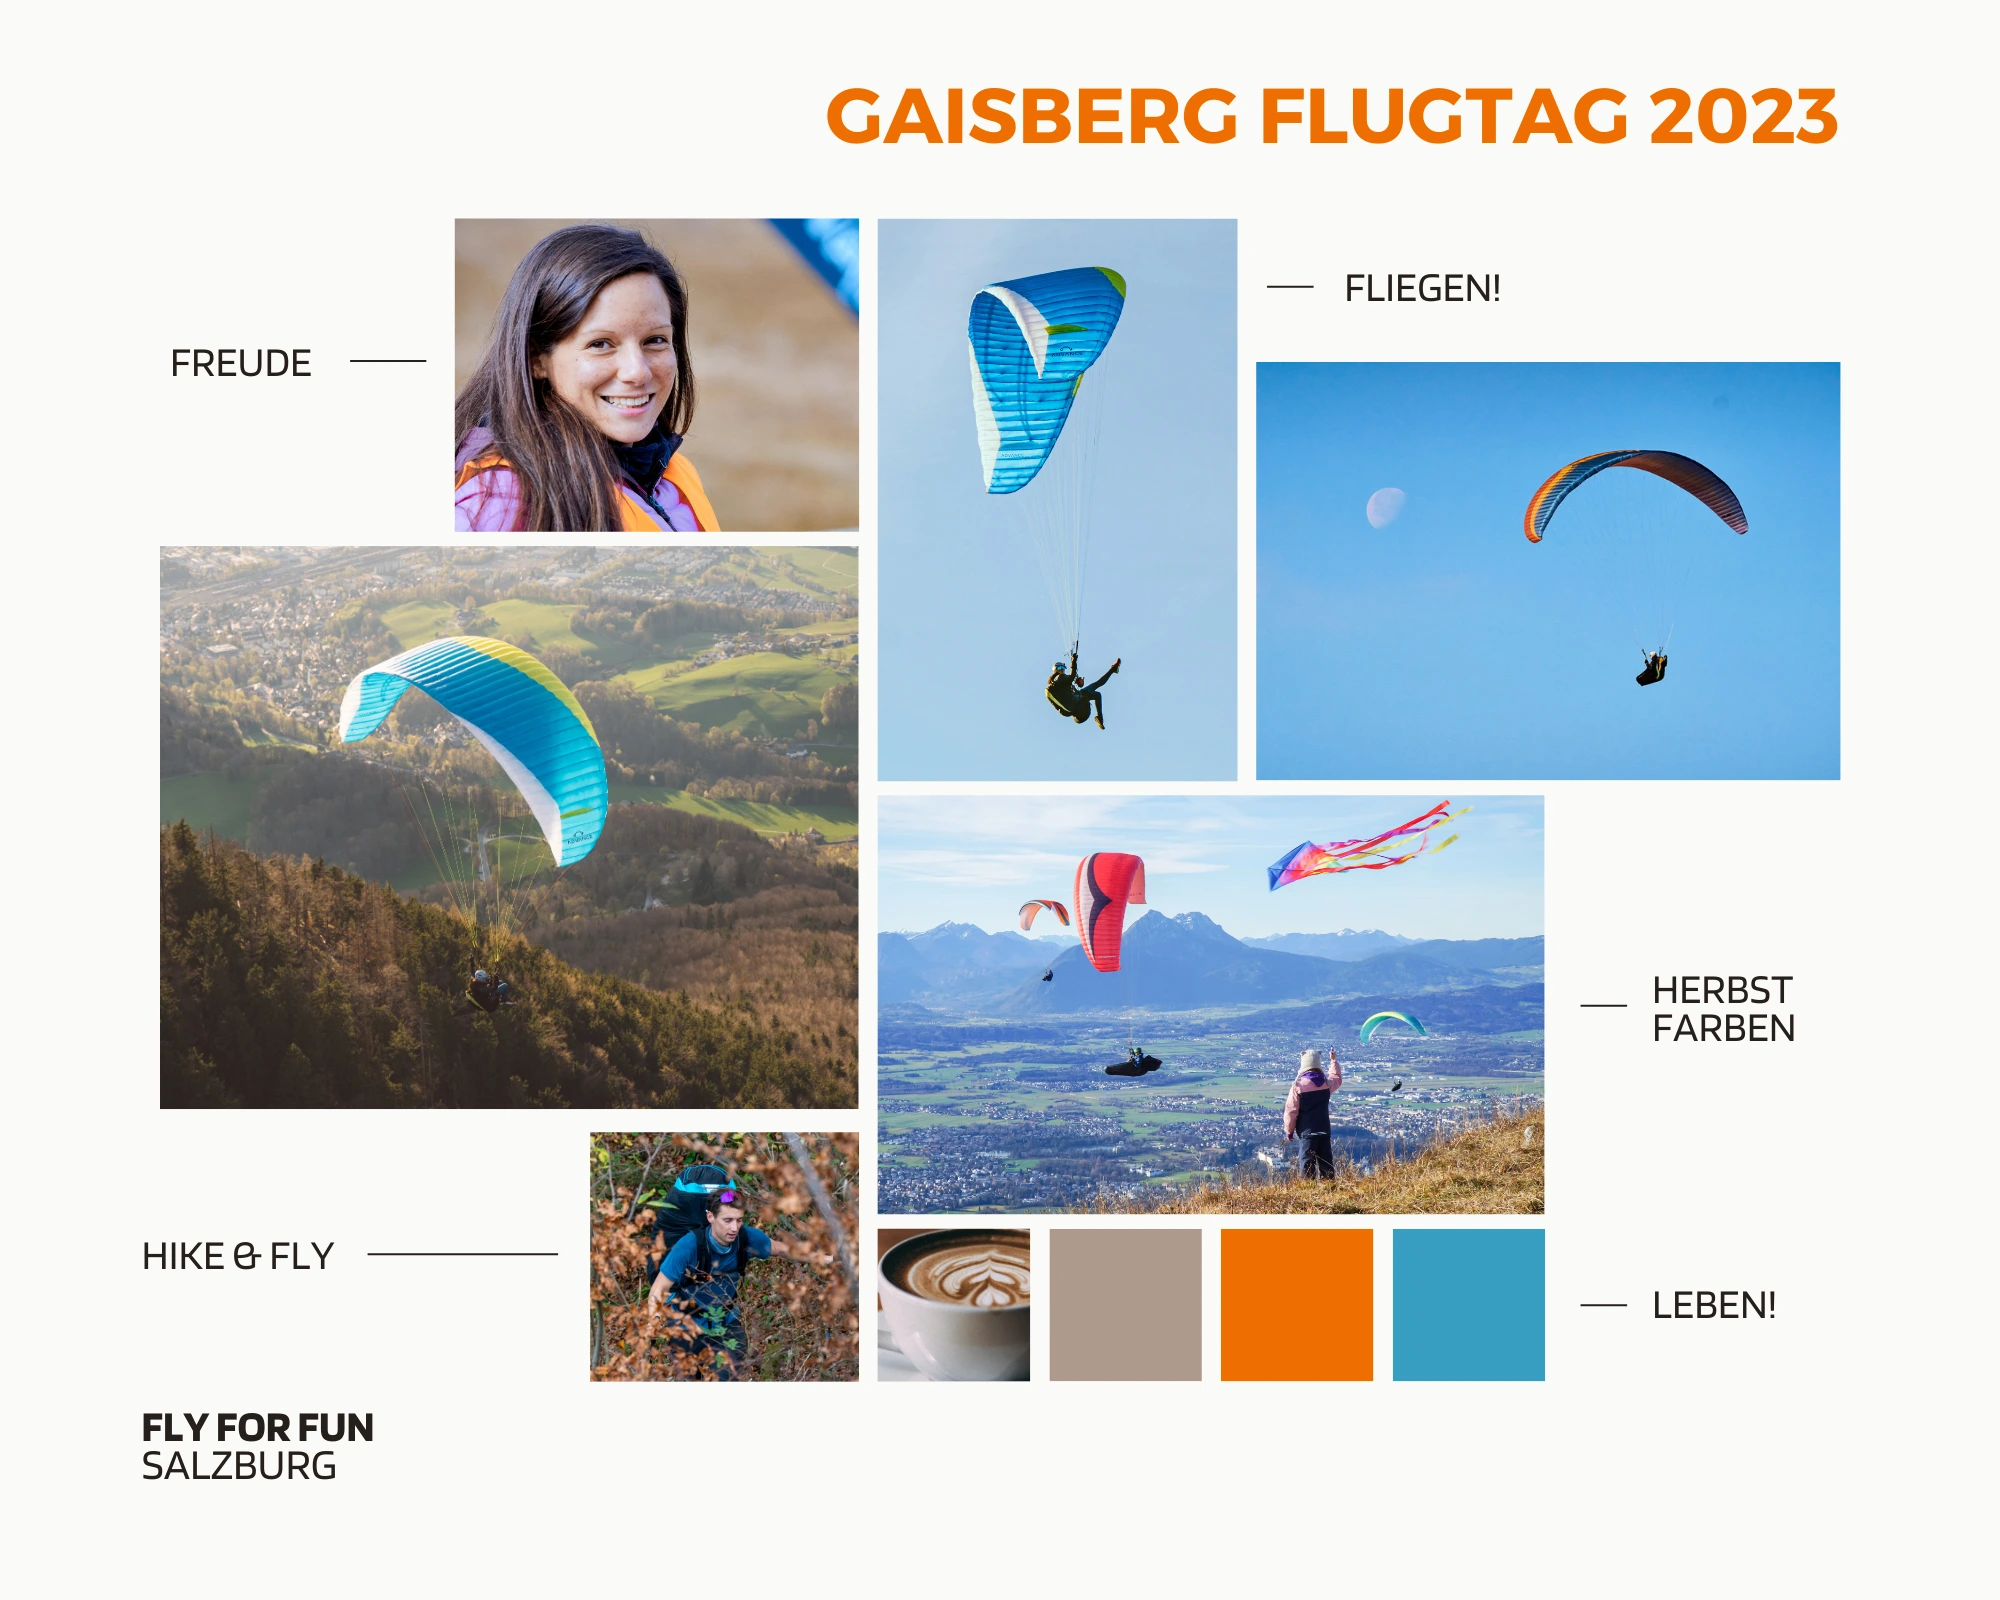 FlyForFun Events: Gaisberg Flugtag 2023